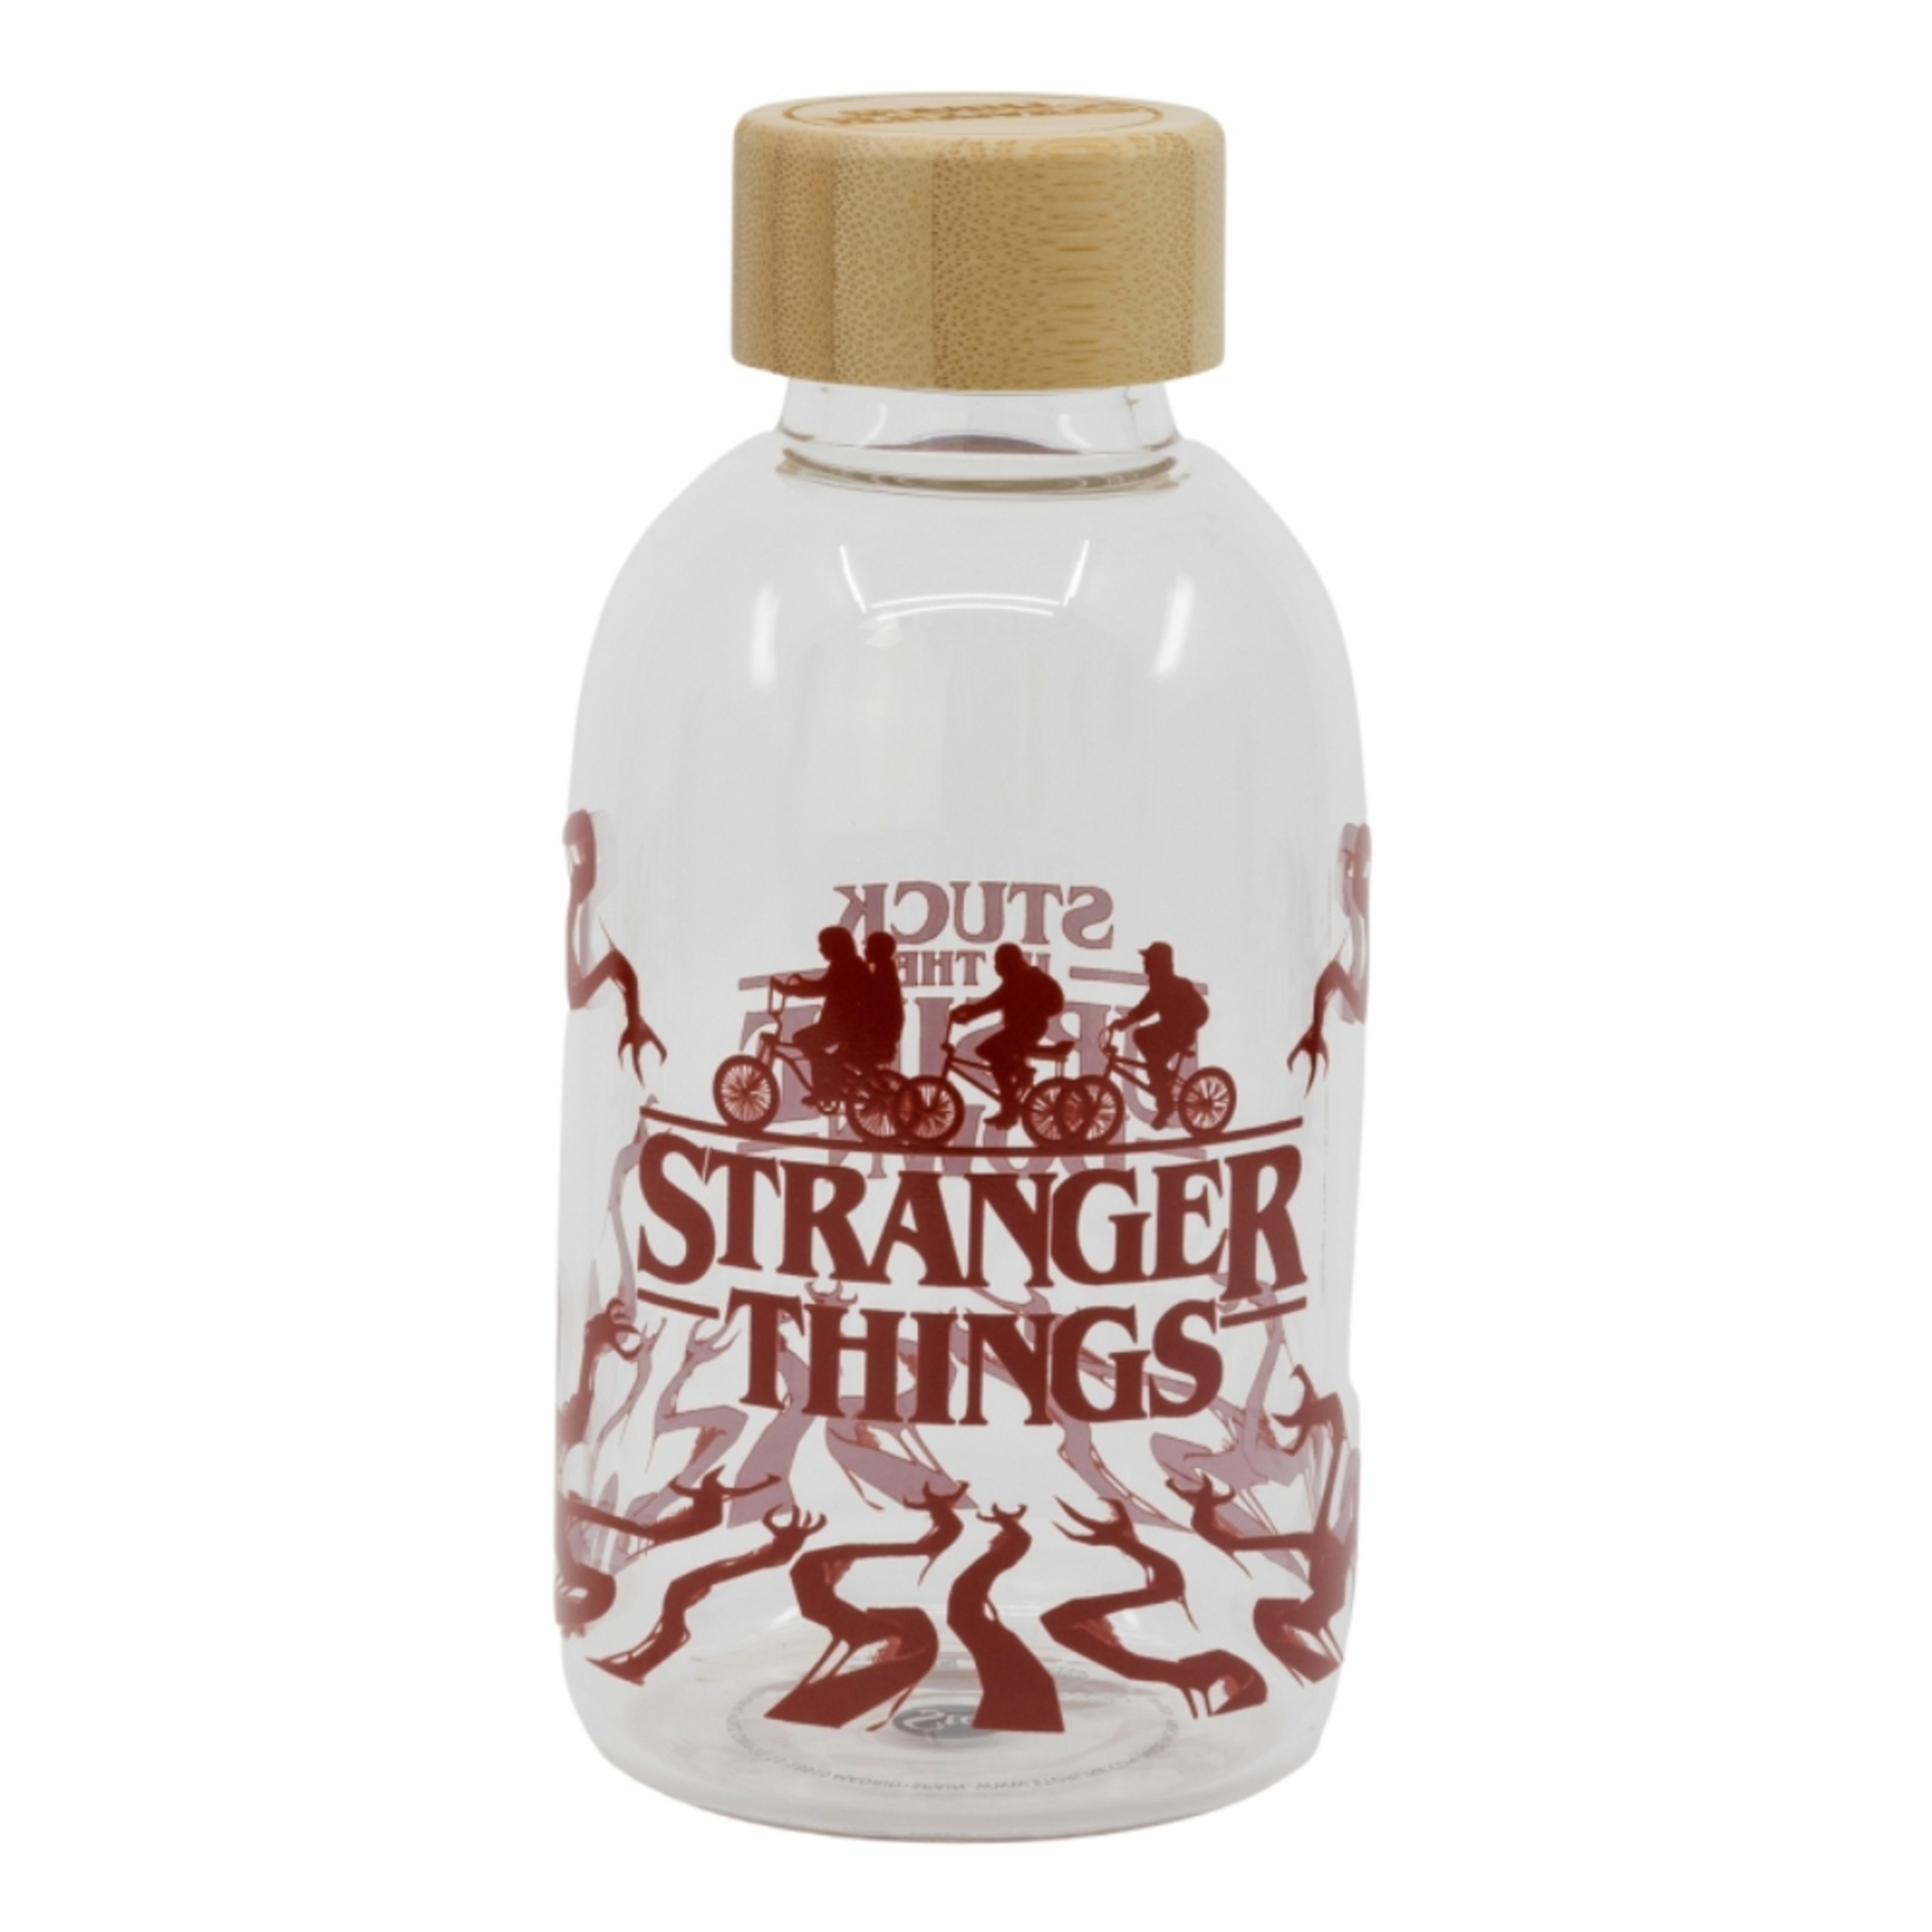 Garrafa De Stranger Things 71217 - transparente - 